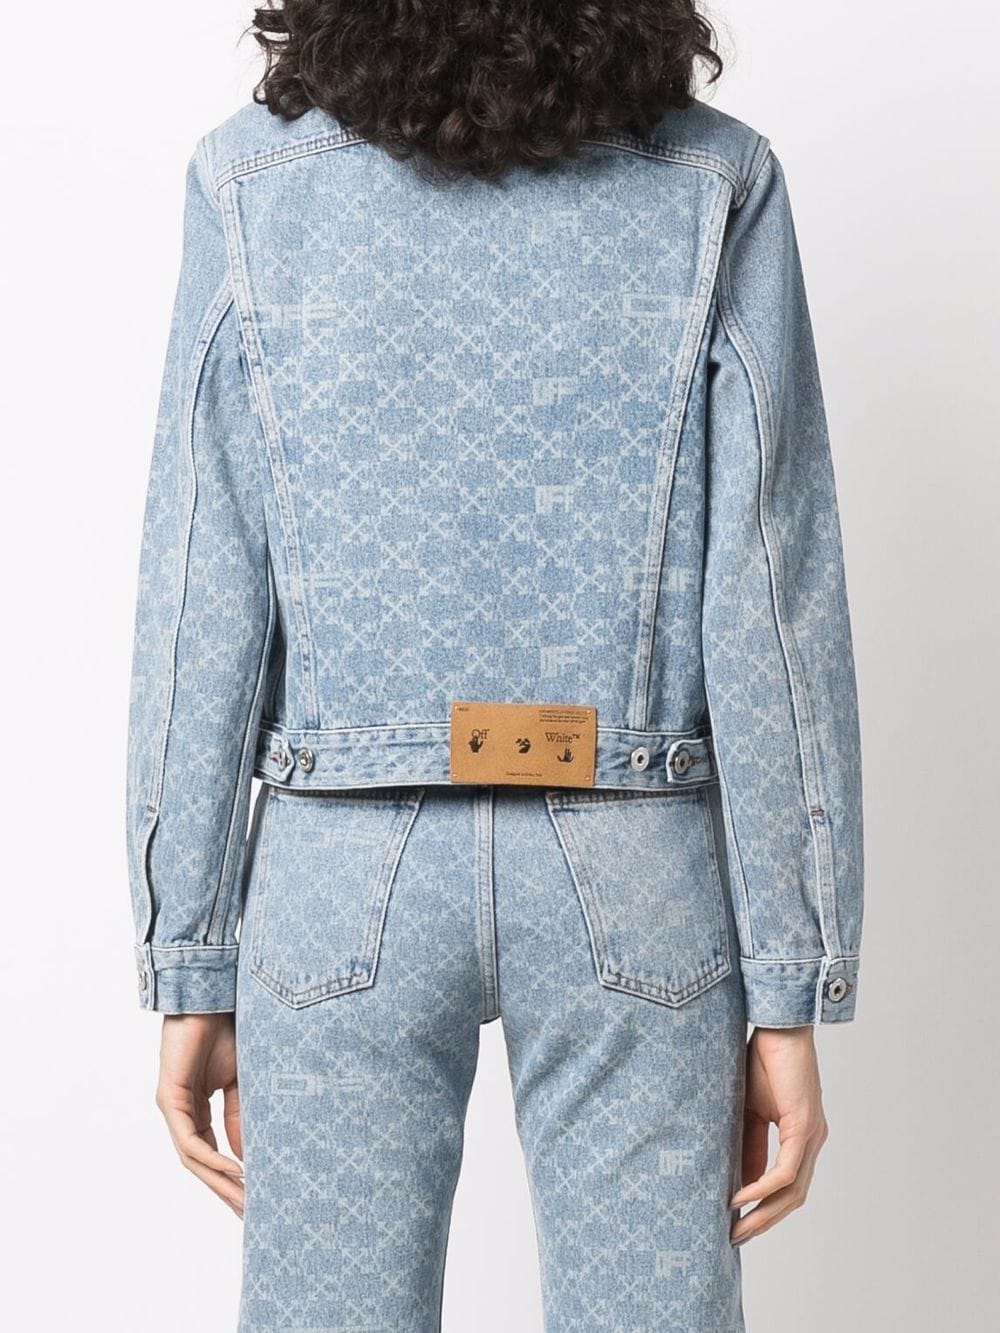 Louis Vuitton X Supreme Monogram Denim Jacket, Men's Fashion